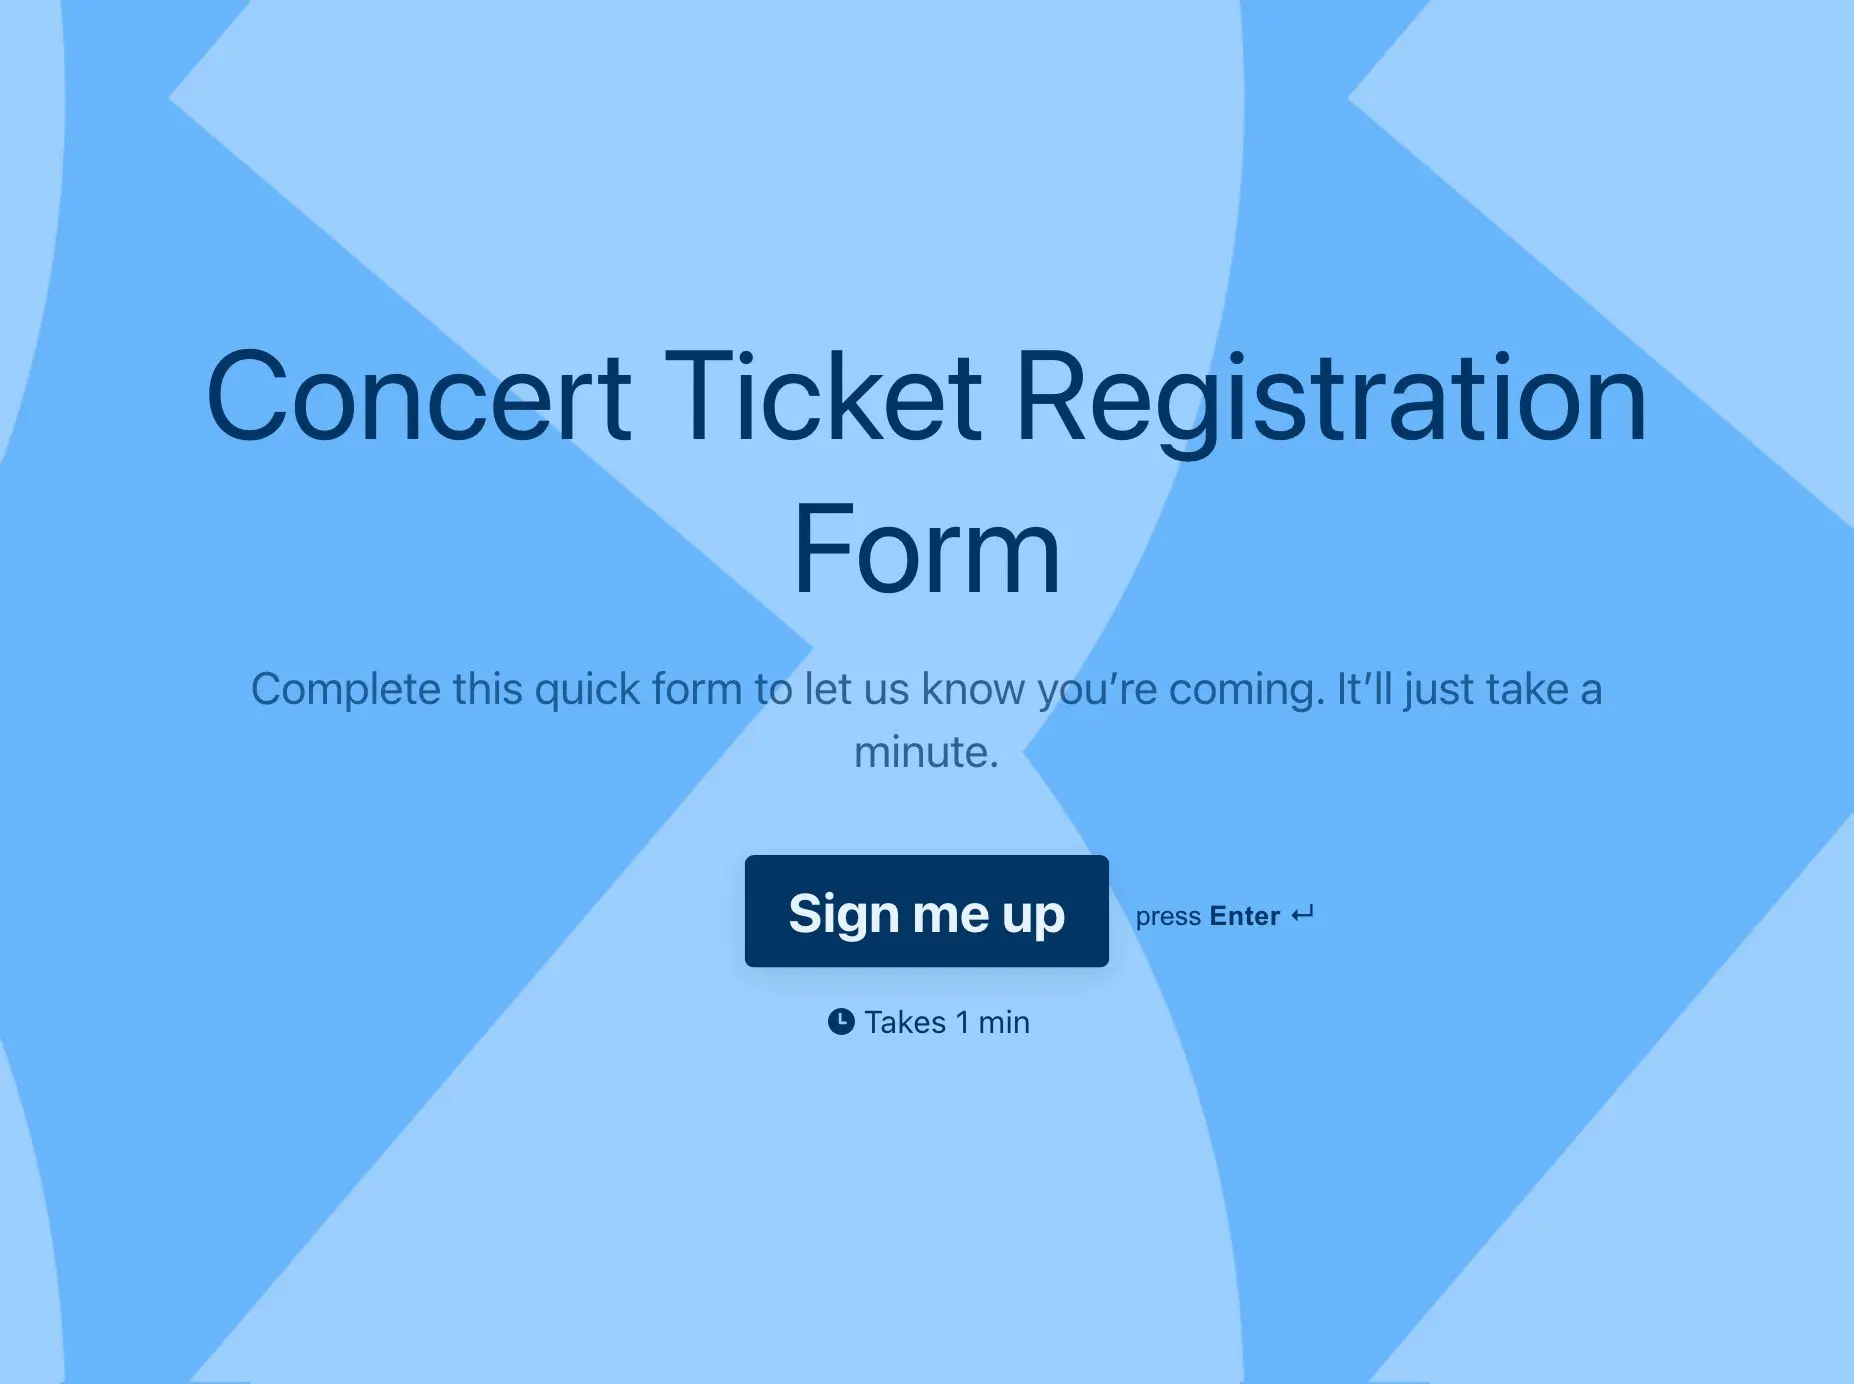 Concert Ticket Registration Form Template Hero